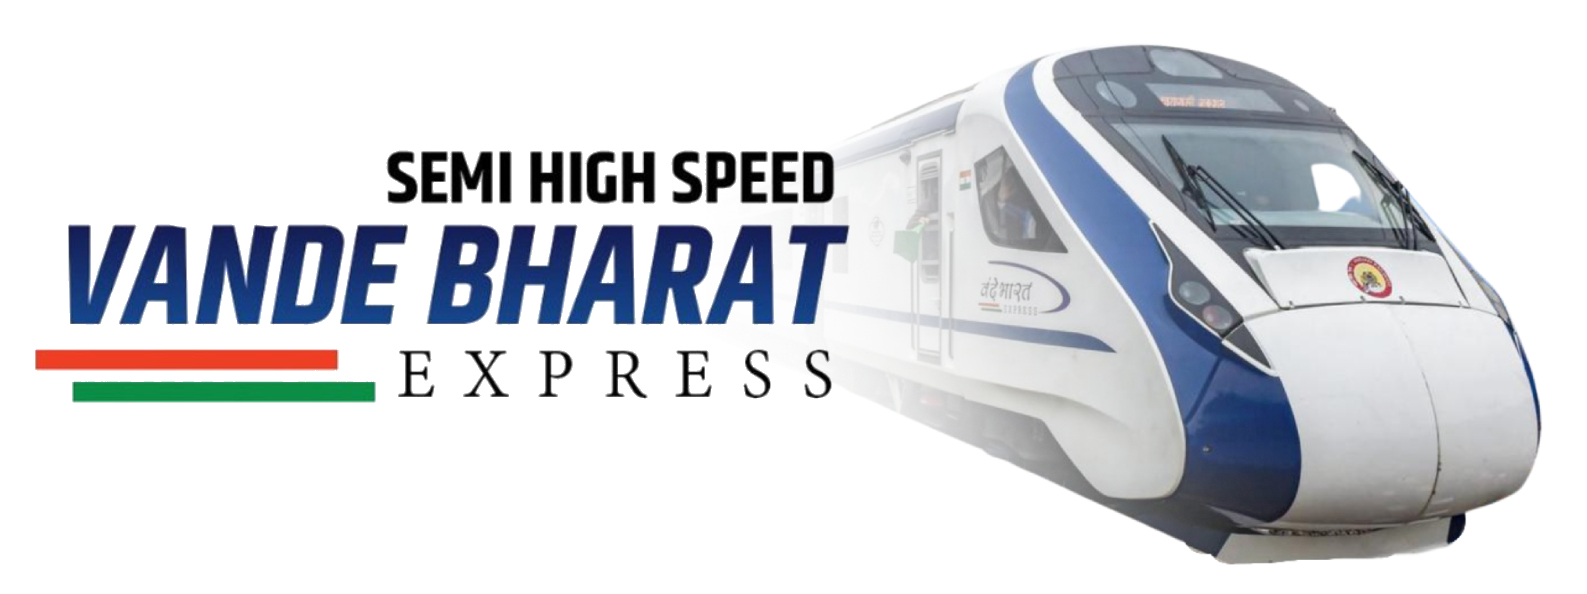 vande bharat express train logo